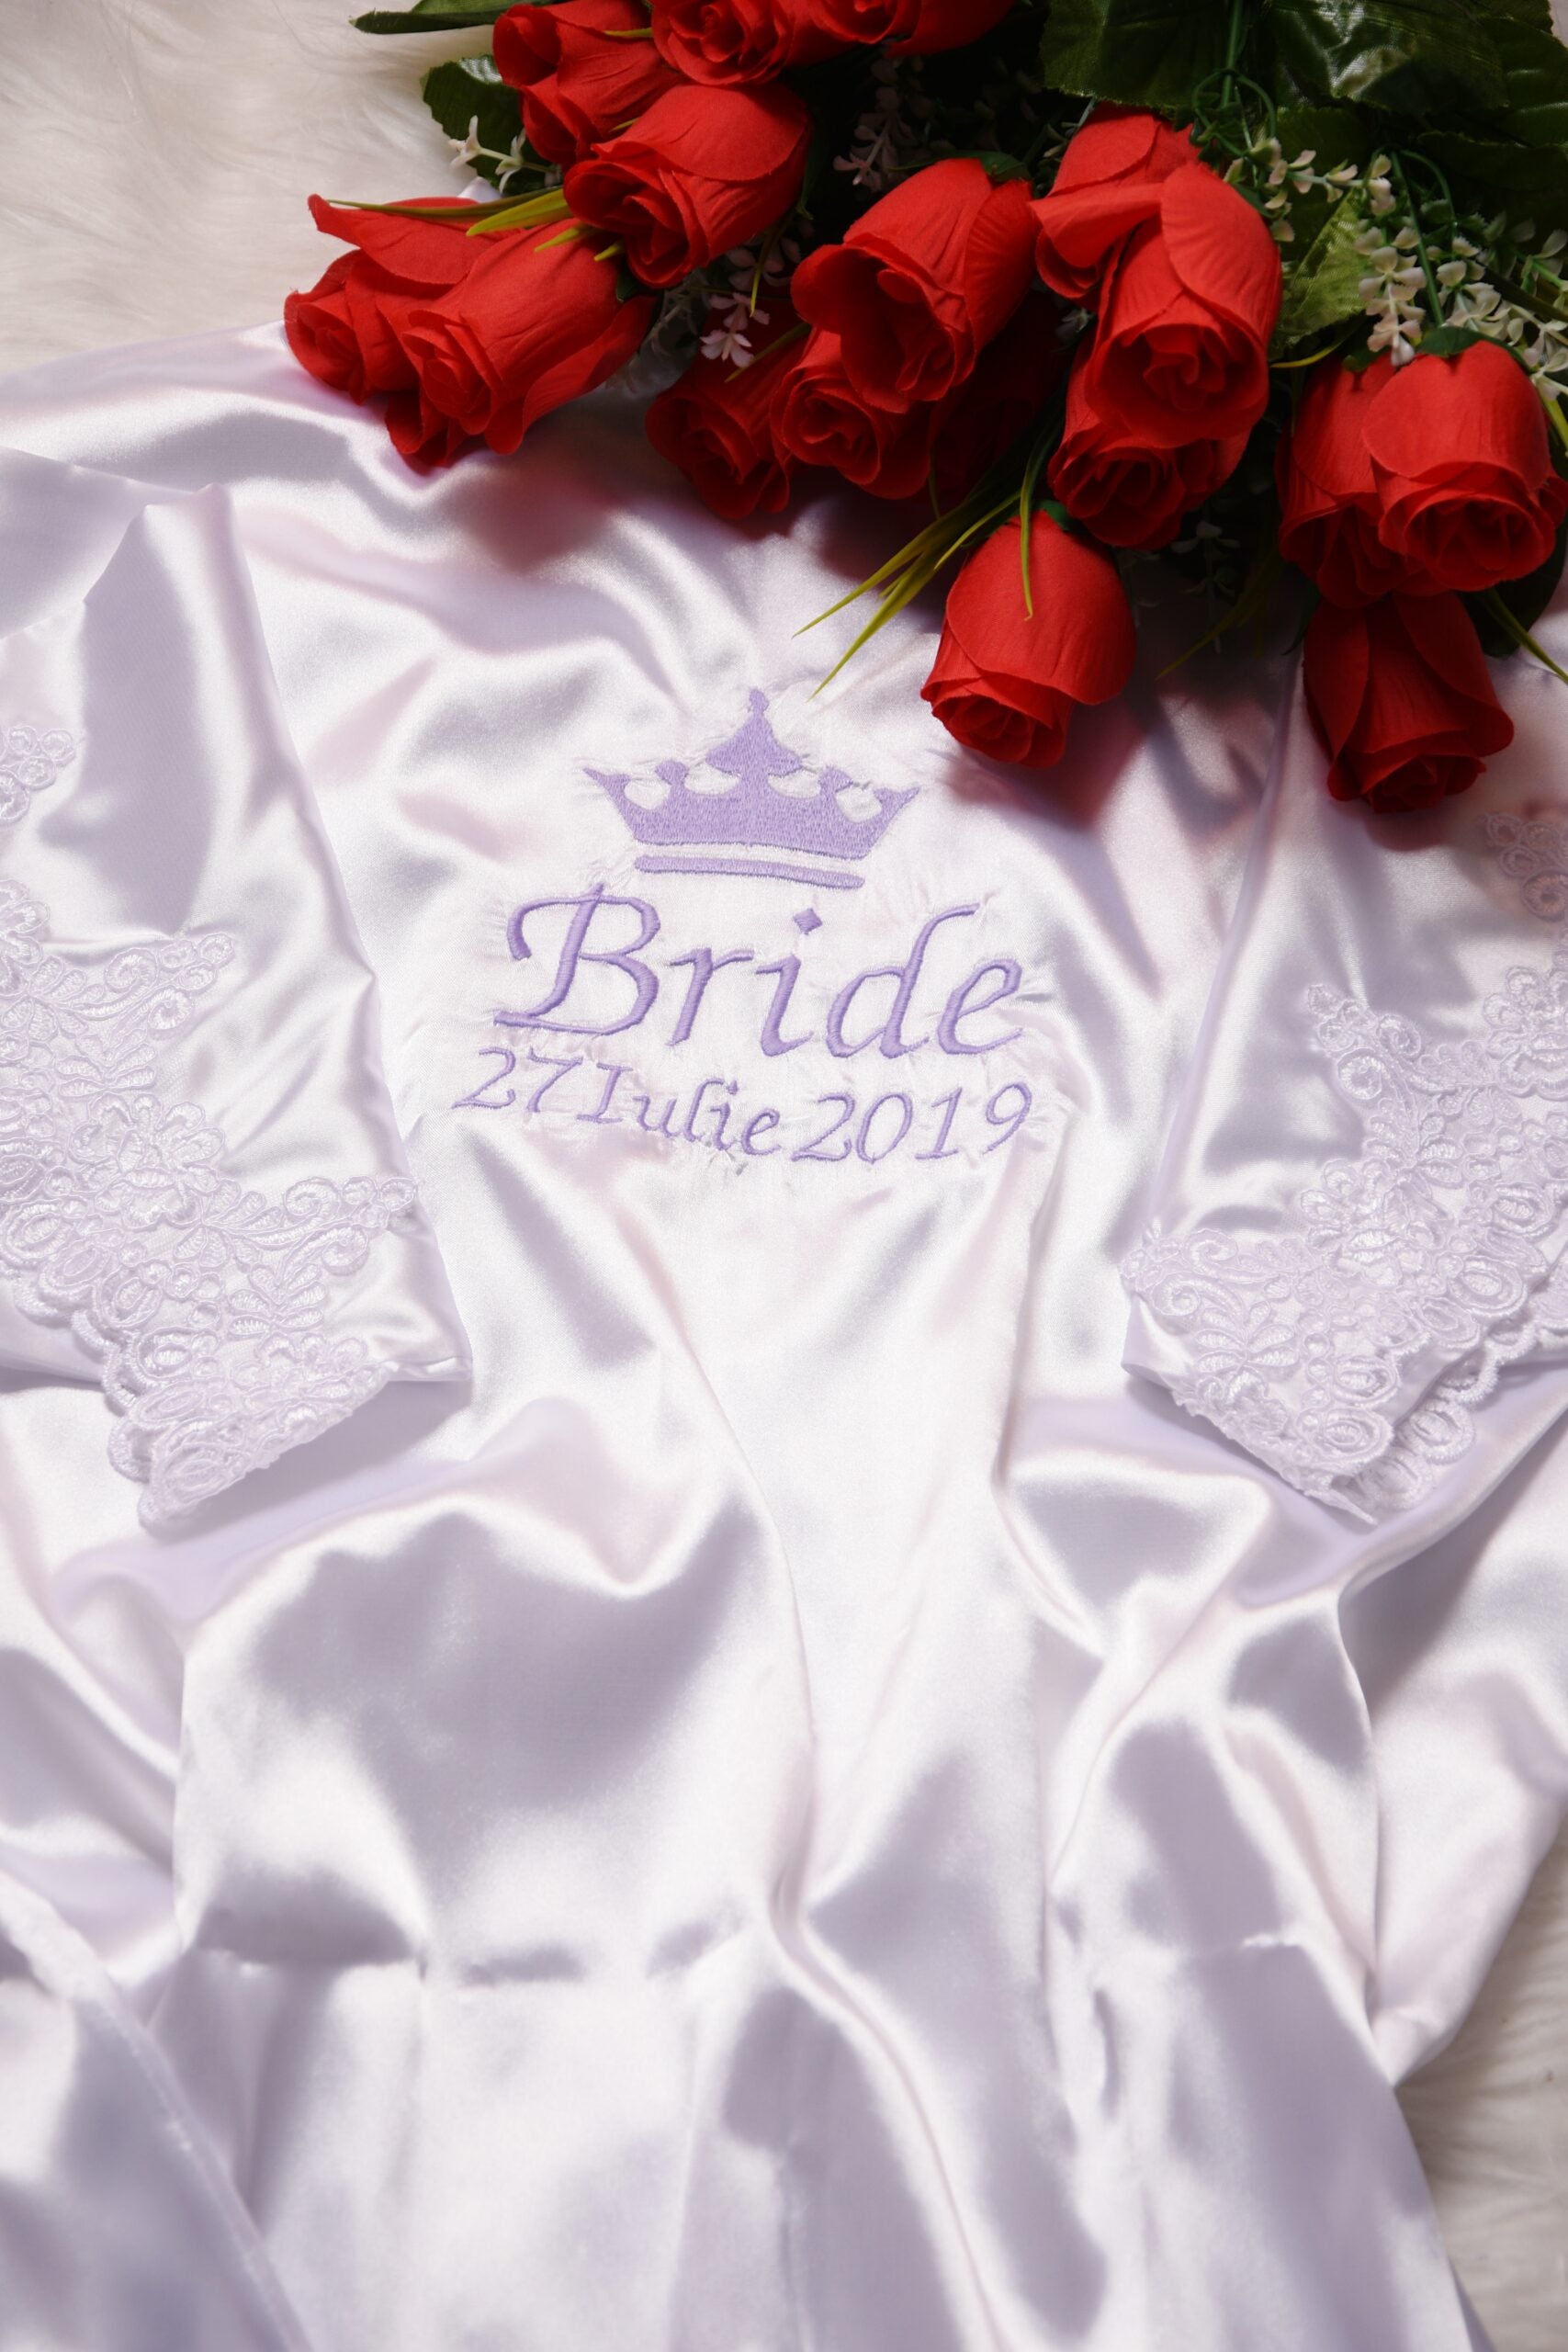 Bride Kimono, High-Quality Elegant Satin, Pure White Lace